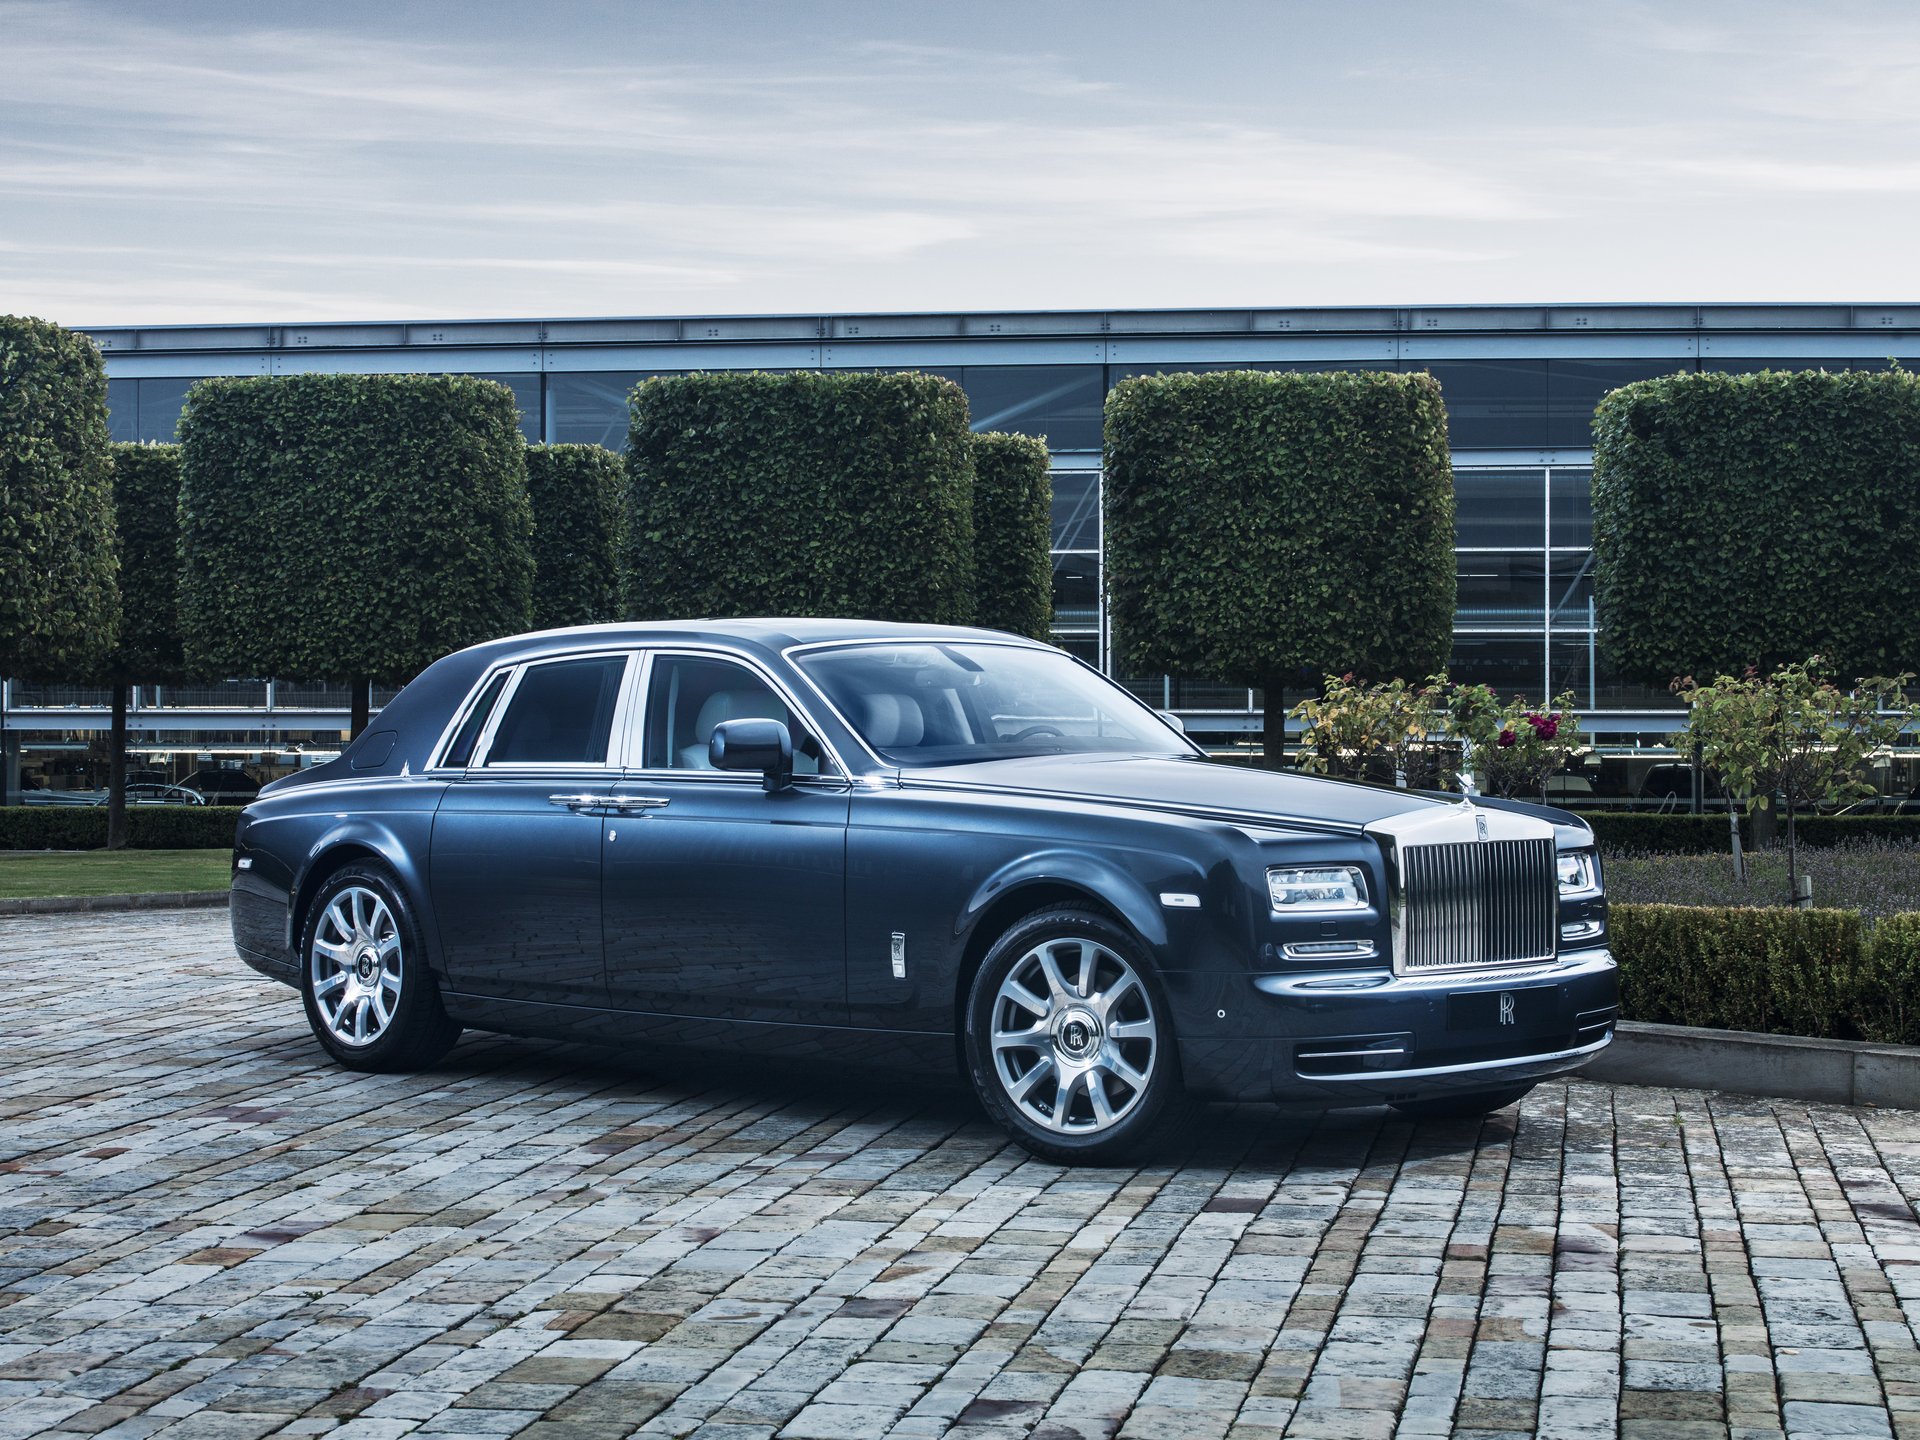 Amazing Rolls Royce Phantom Pictures & Backgrounds